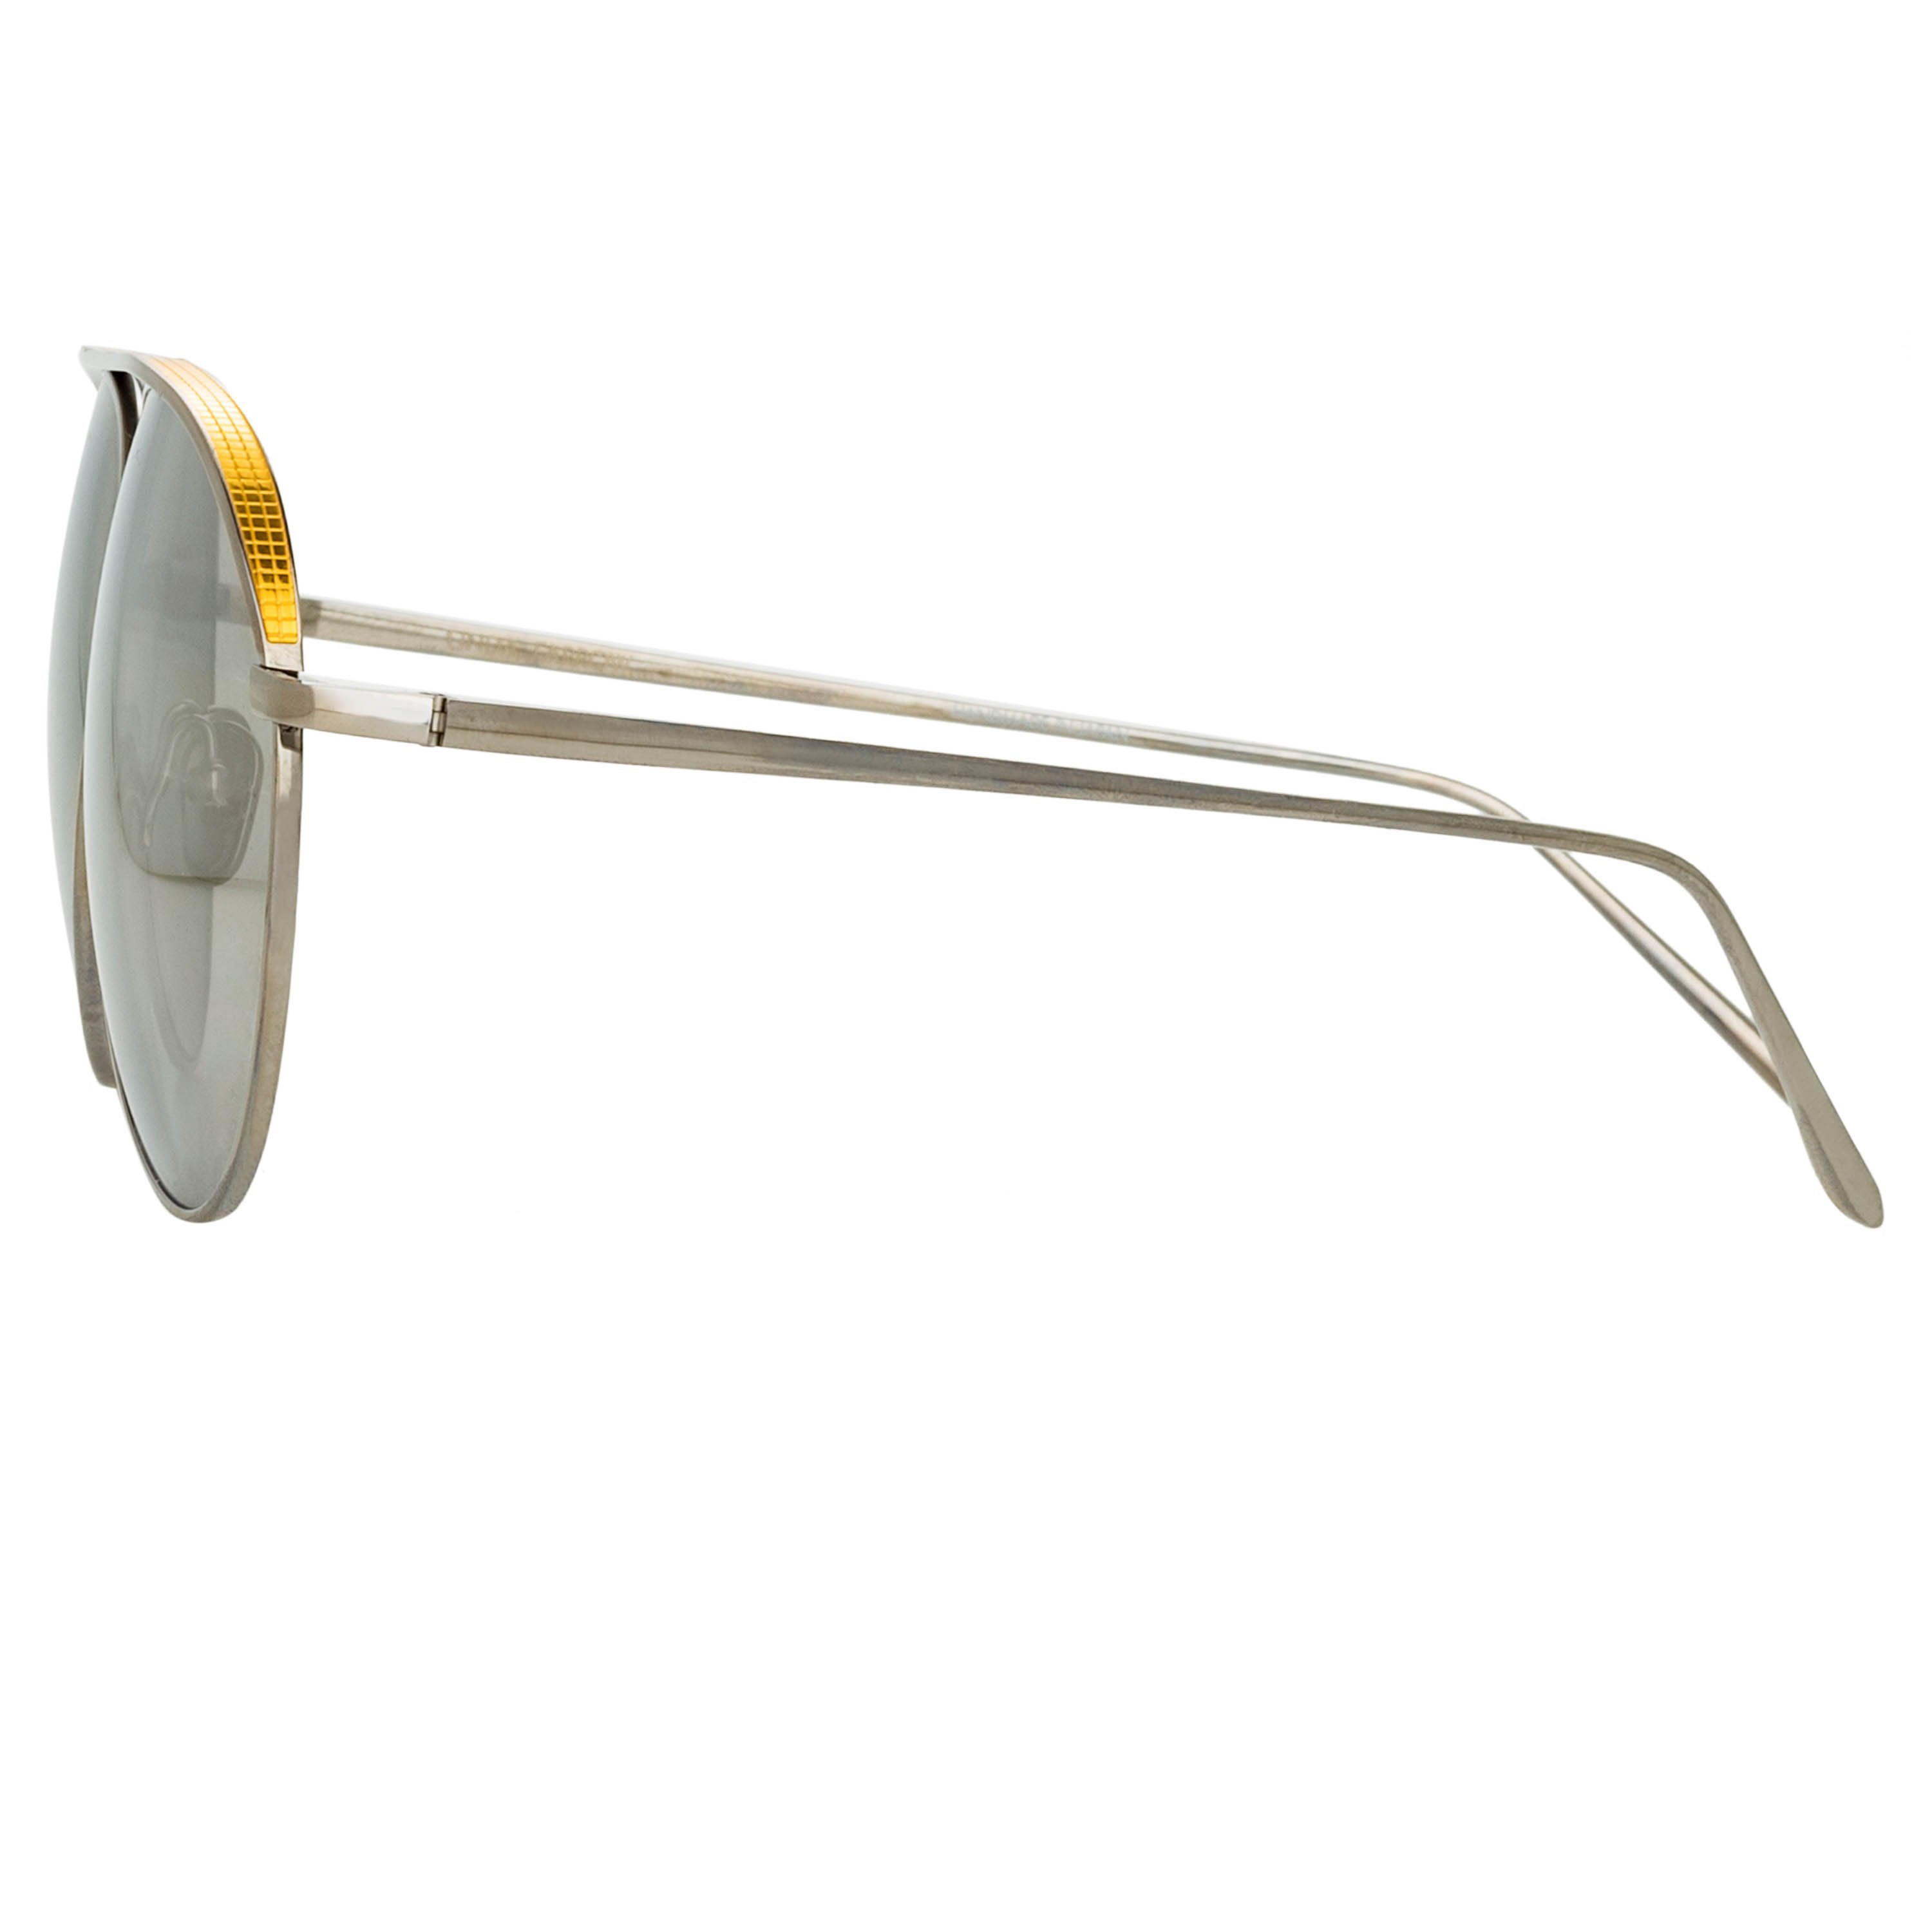 Color_LFL1078C4SUN - Roberts Aviator Sunglasses in White Gold and Platinum